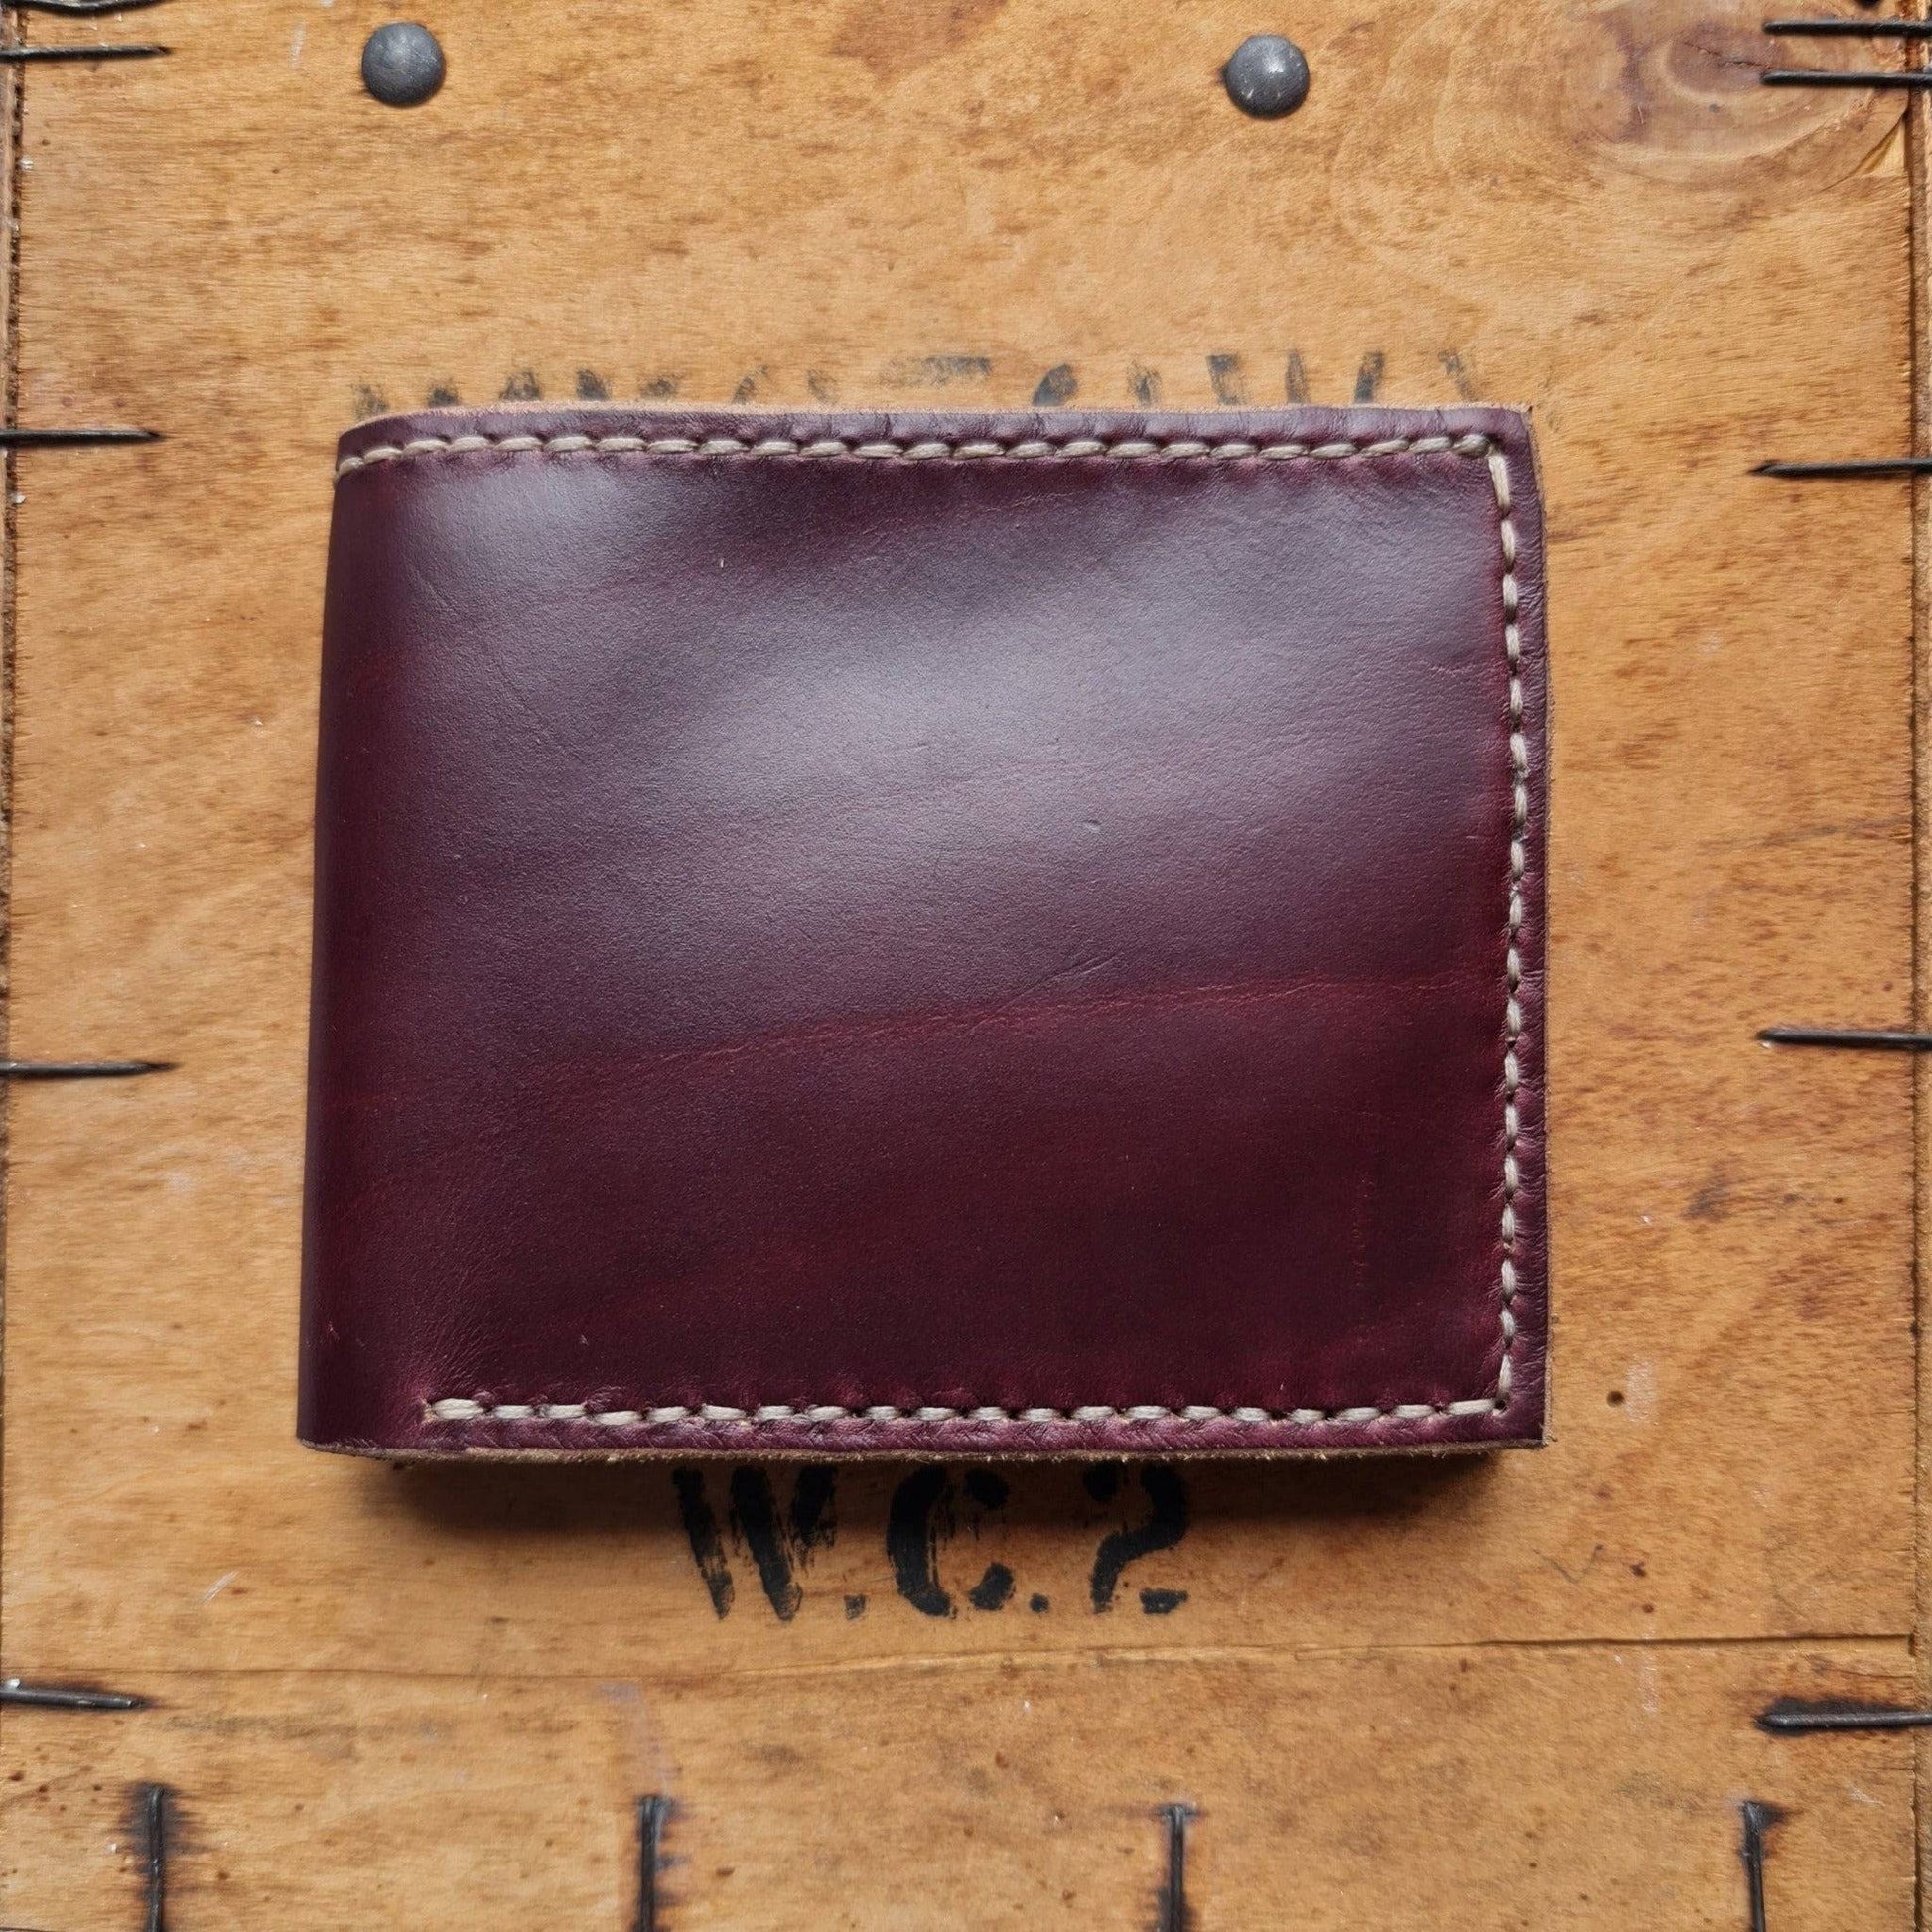 No. 1 Wrangler Card Holders, Horween Burgundy Chromexcel Leather, Front